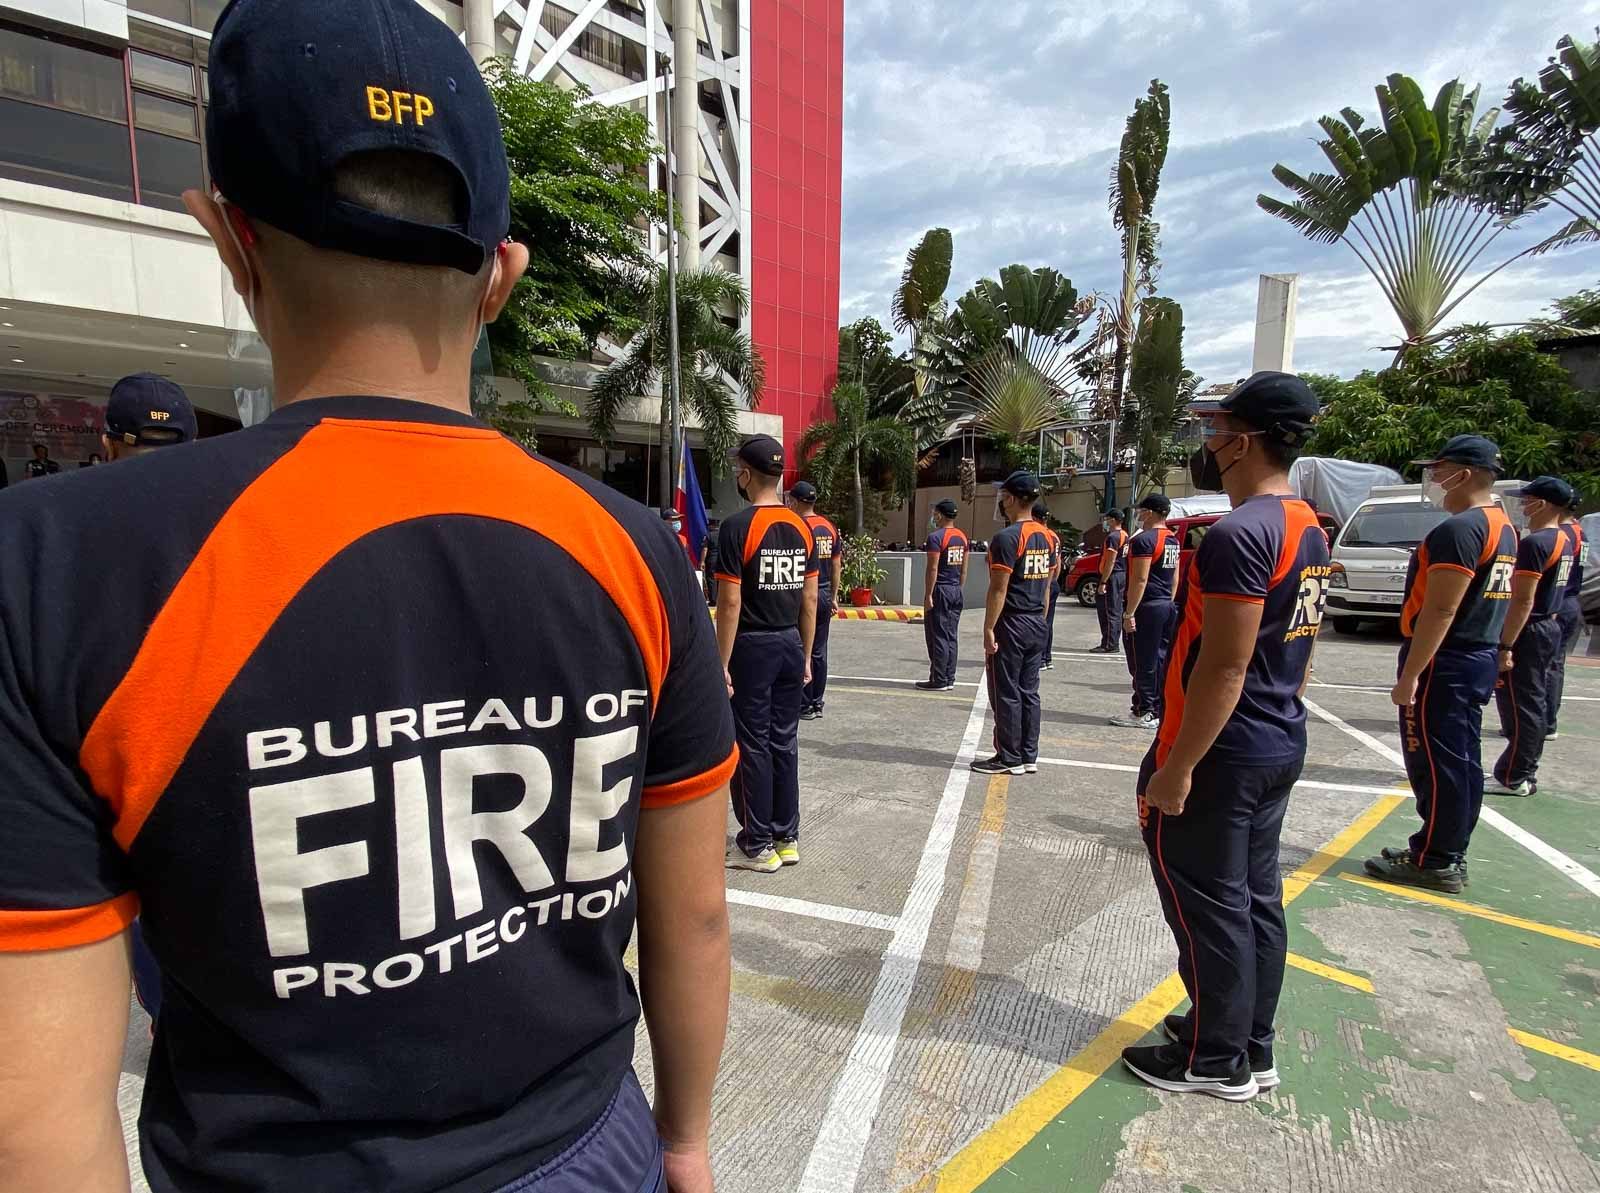 CHR: Arming firemen might cause more harm than good